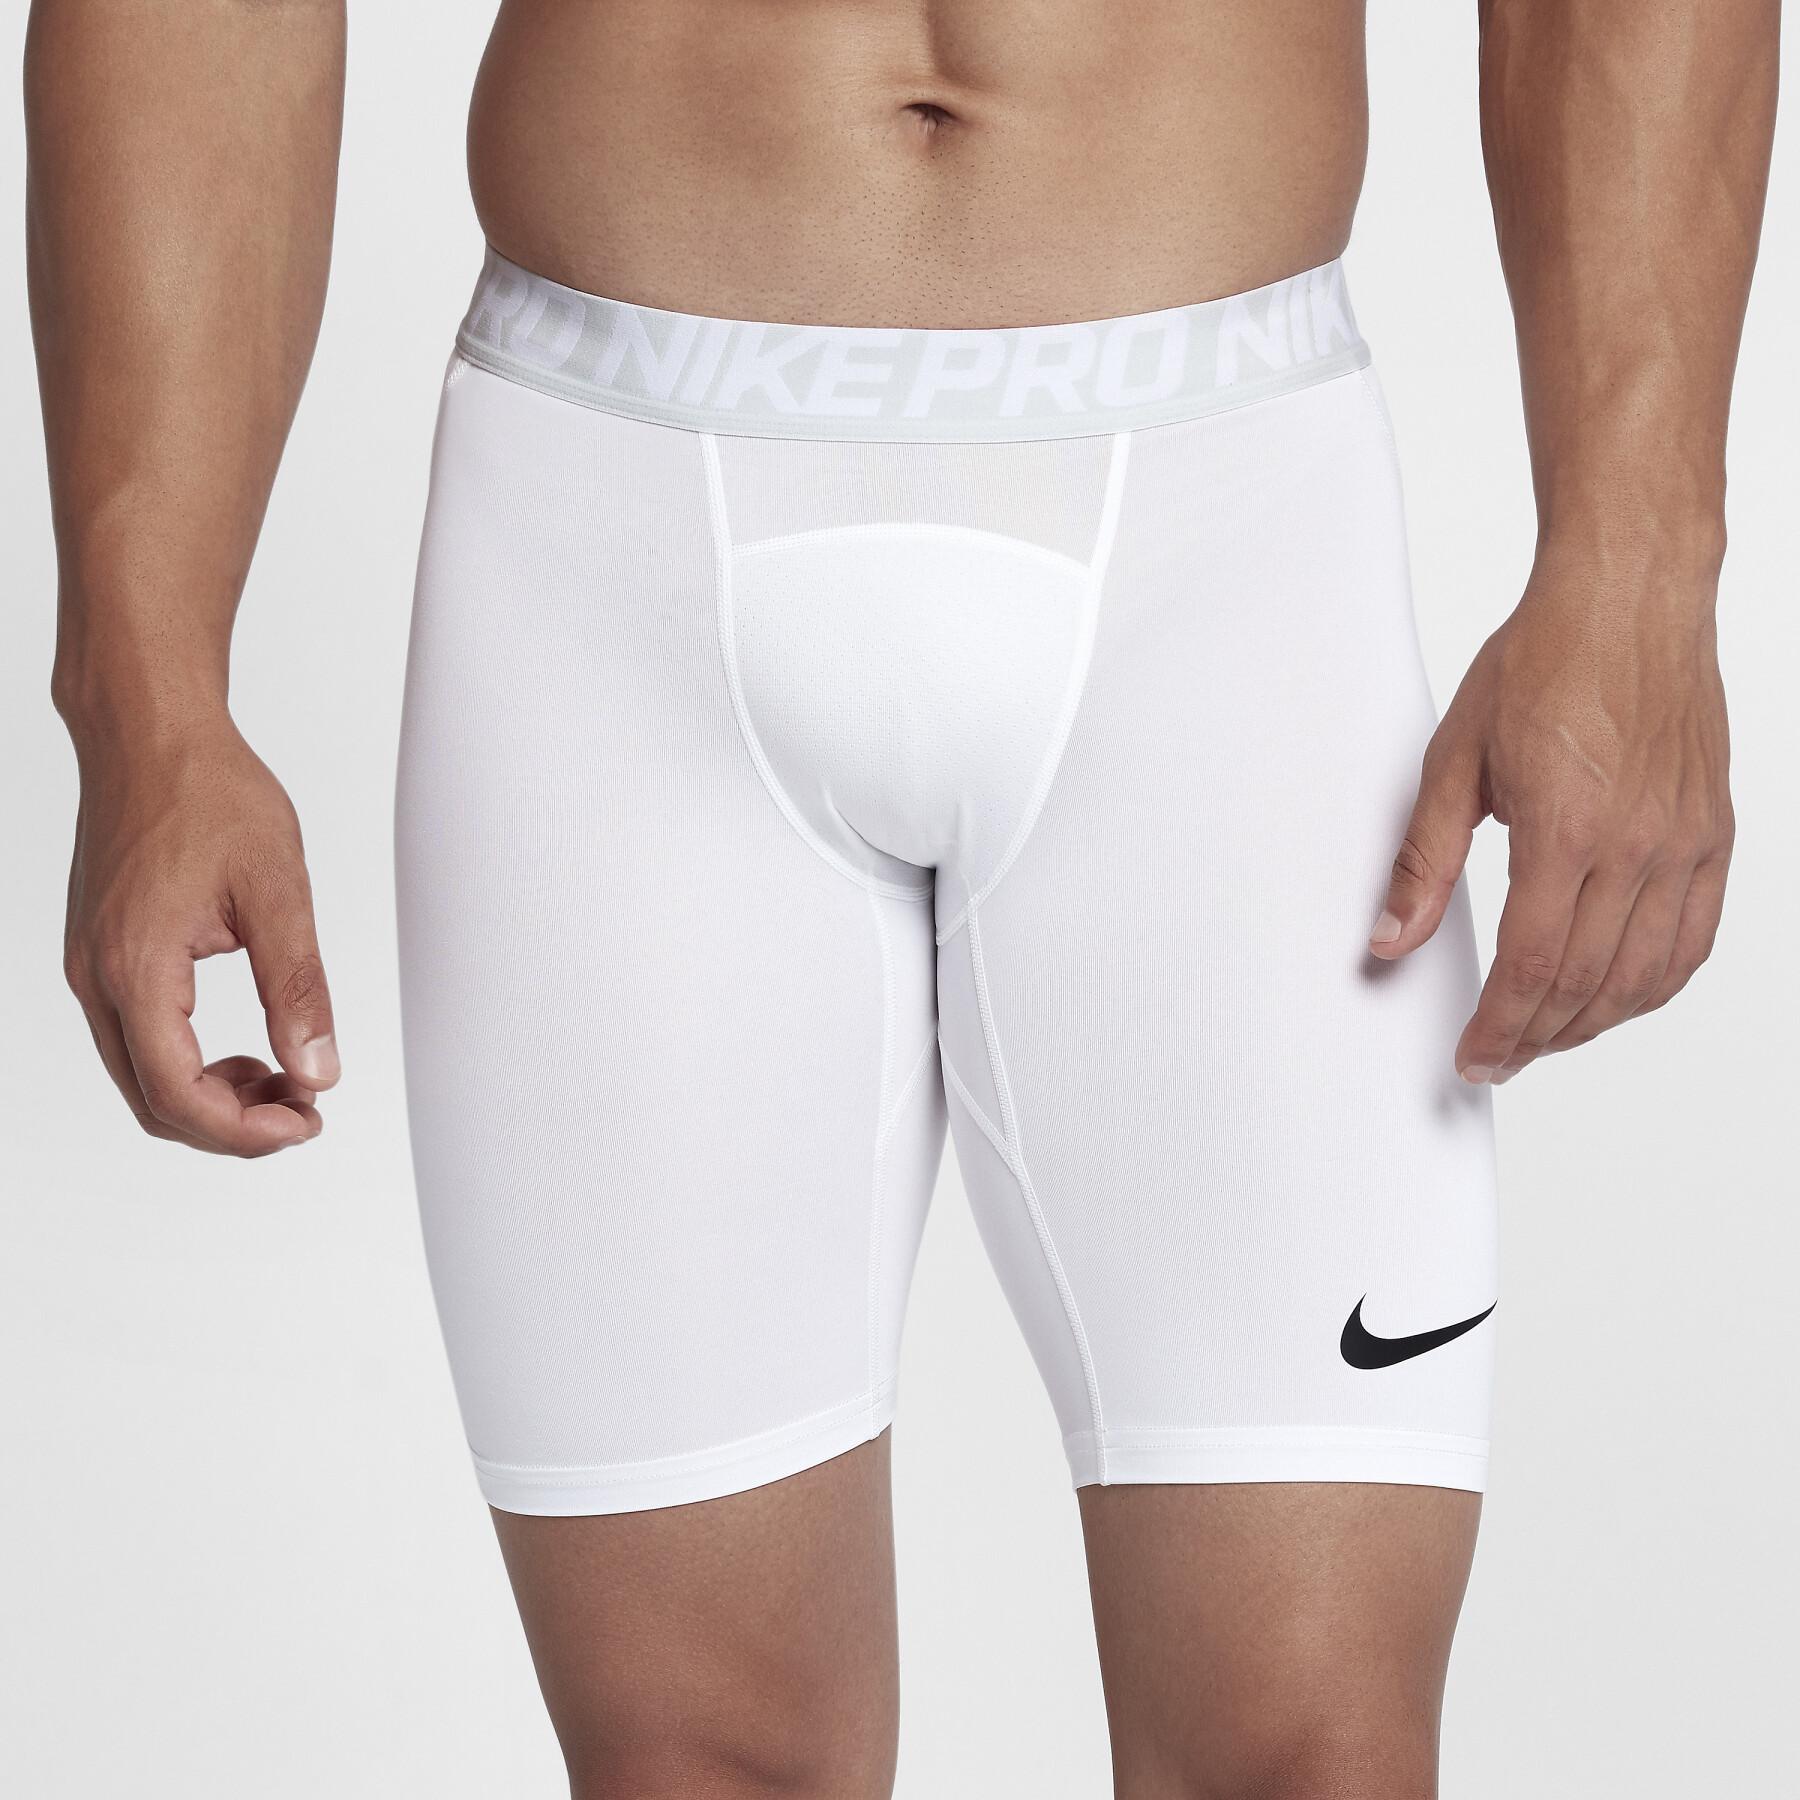 Short Nike Pro 15 cm Shorts Textile Handball wear